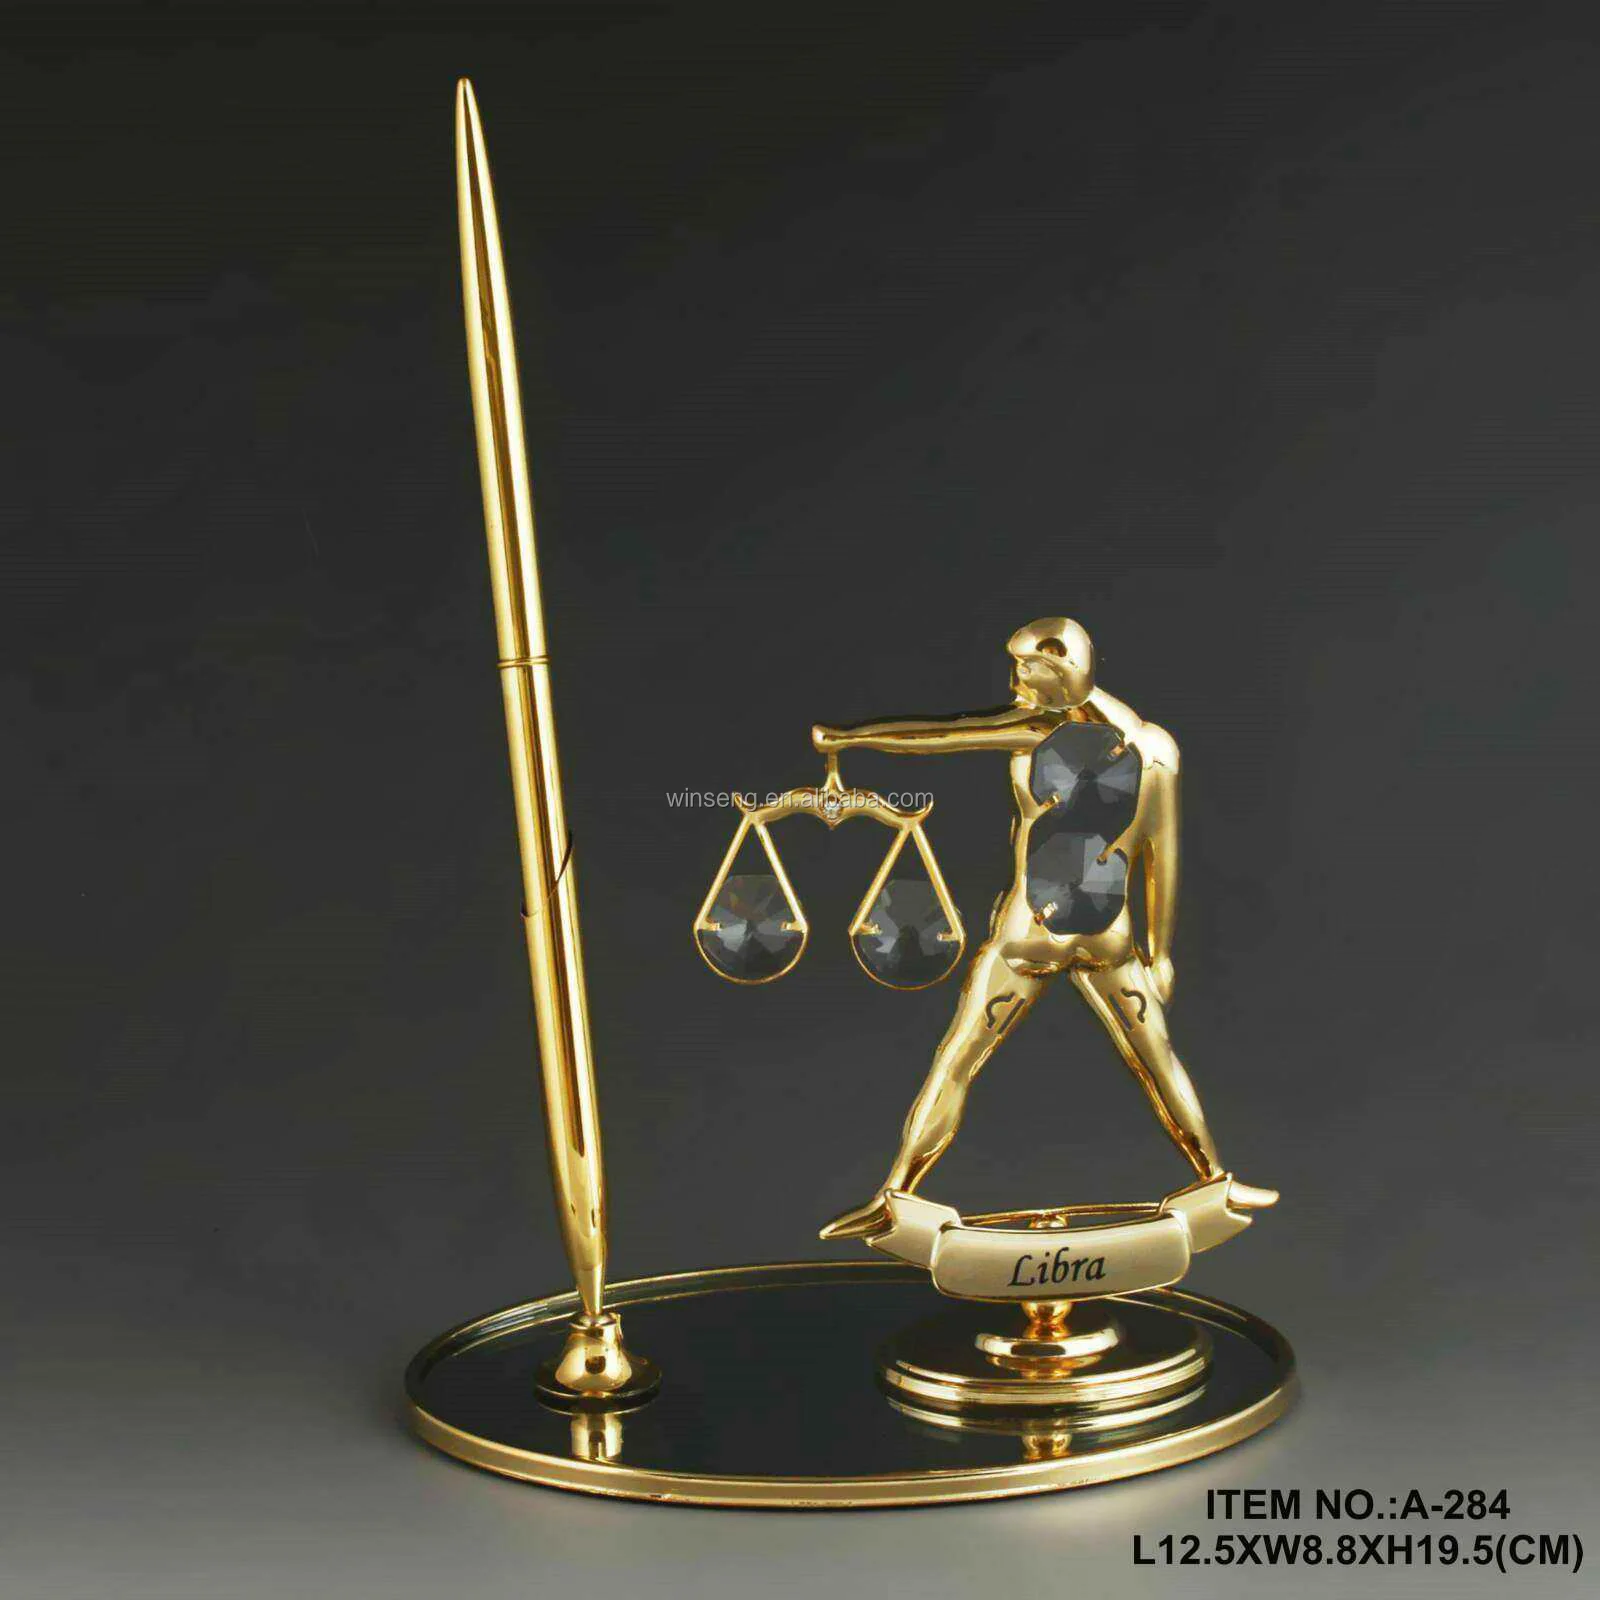 Handmade 24K Gold Plated Justice Scale Libra Decorated Swarovski